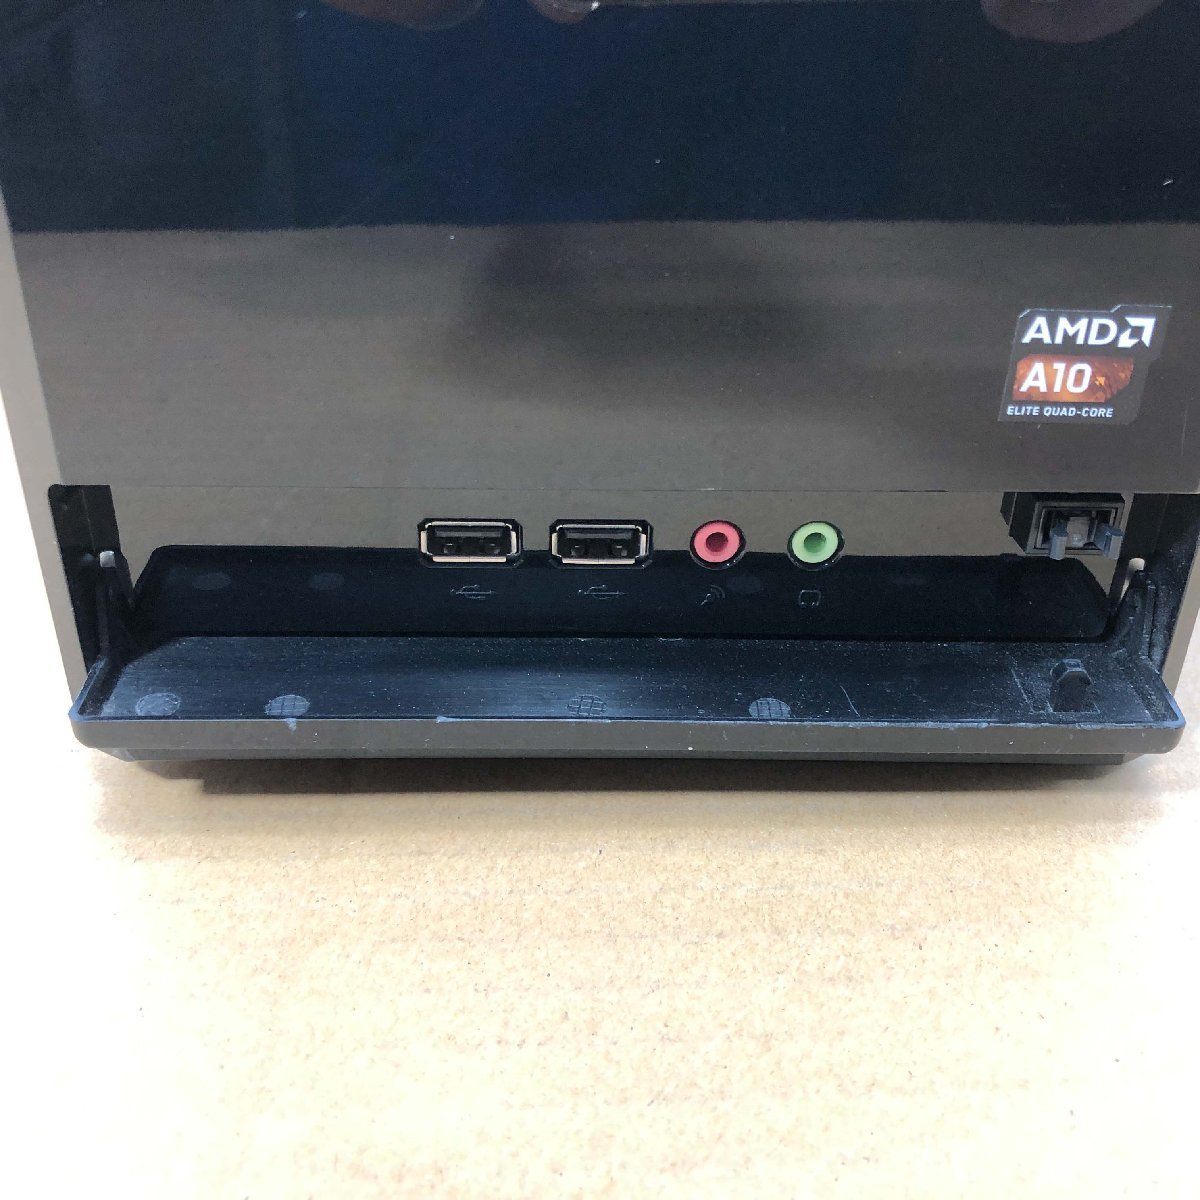 mouse computer LM-AR322S-W7-EX AMD A10 7700K 3.40GHz/8GB/1TB